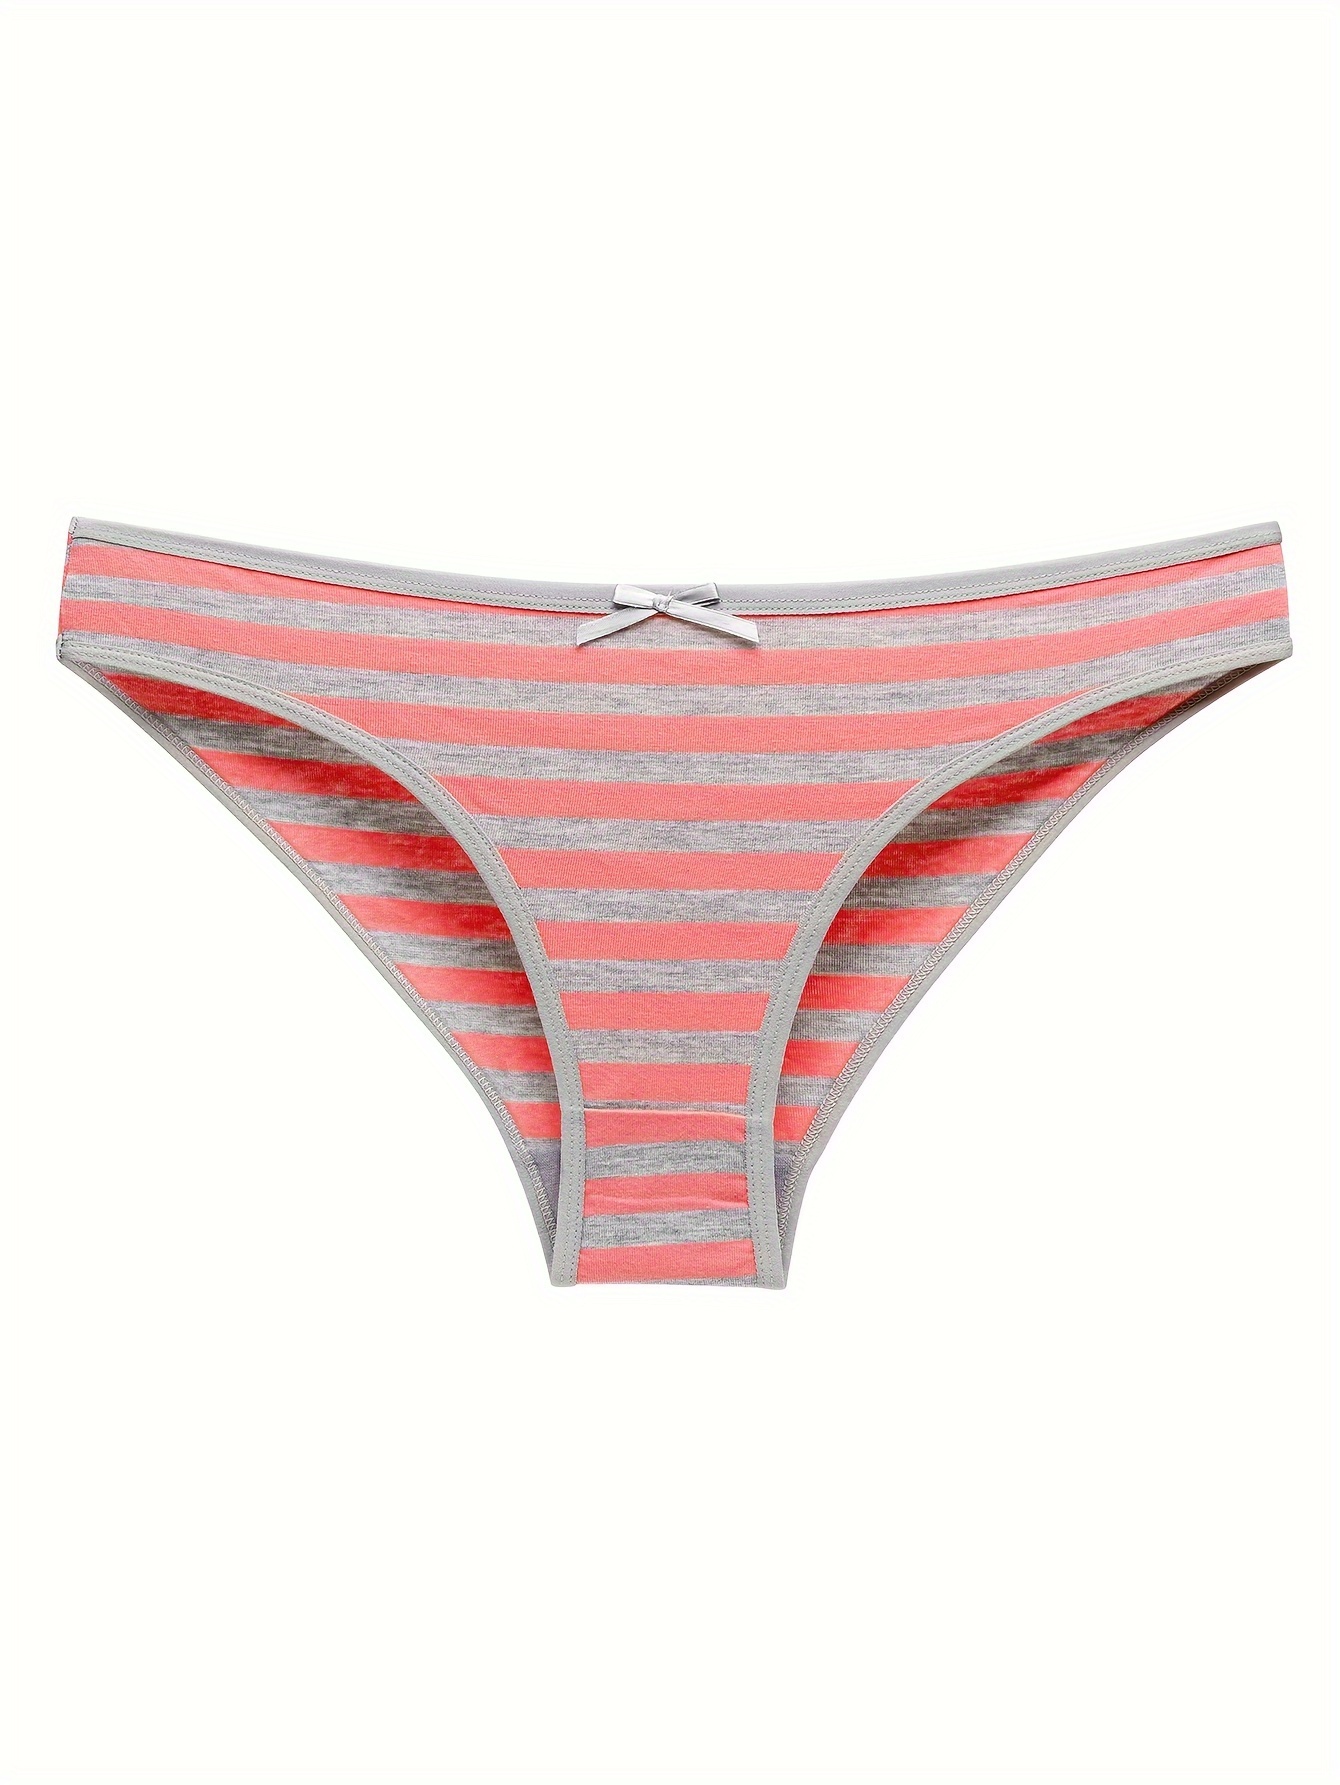 Piftif women's Assorted colour strip and plain mix string panty